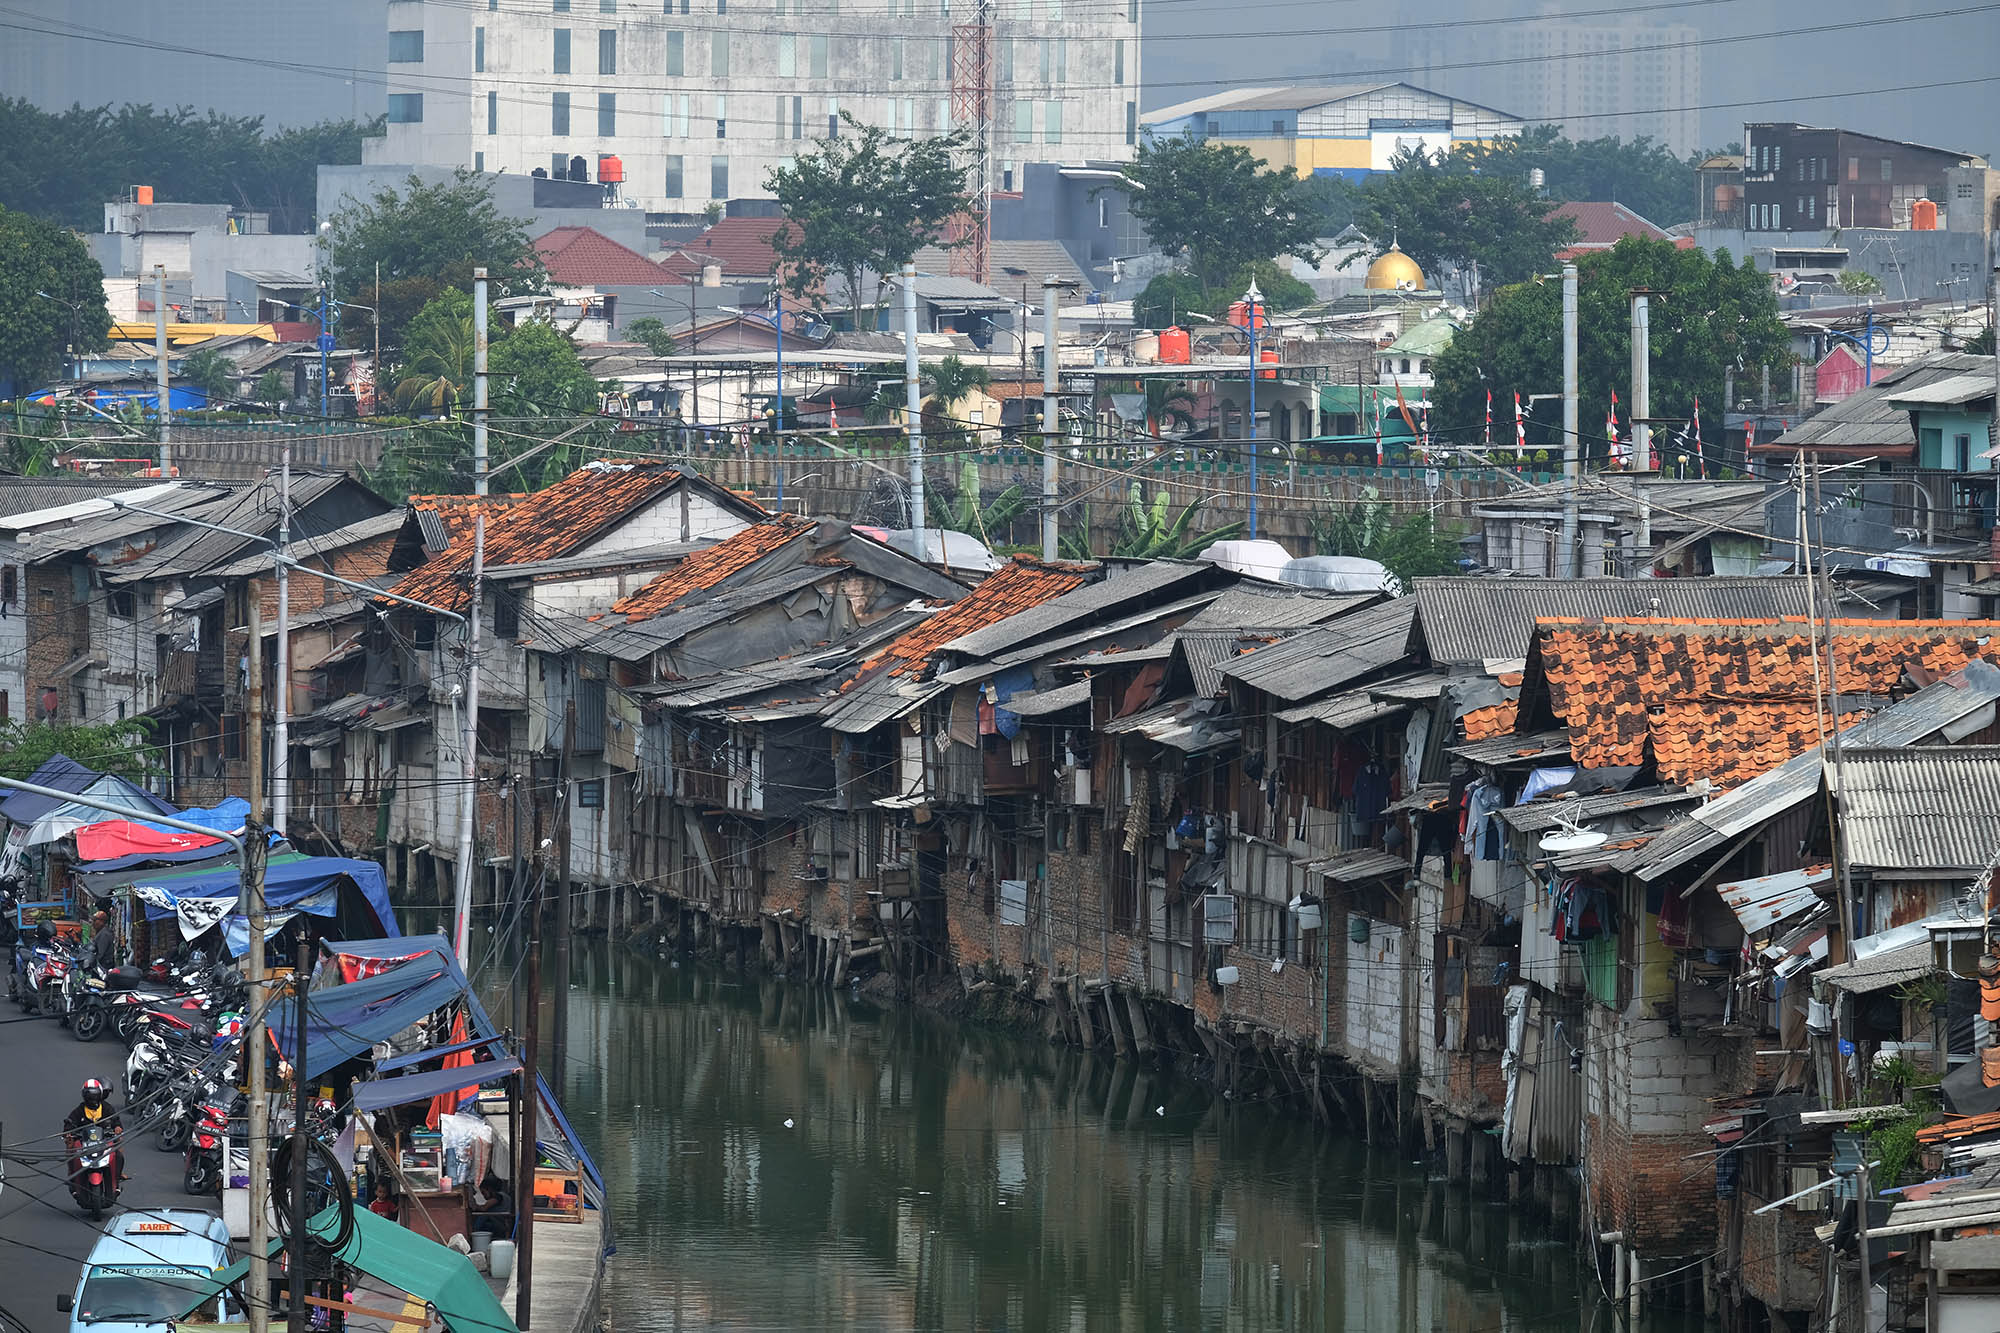 Suasana permukiman padat penduduk di bantaran Kali Tanjung Selor, Cideng, JakartaFoto: Ismail Pohan